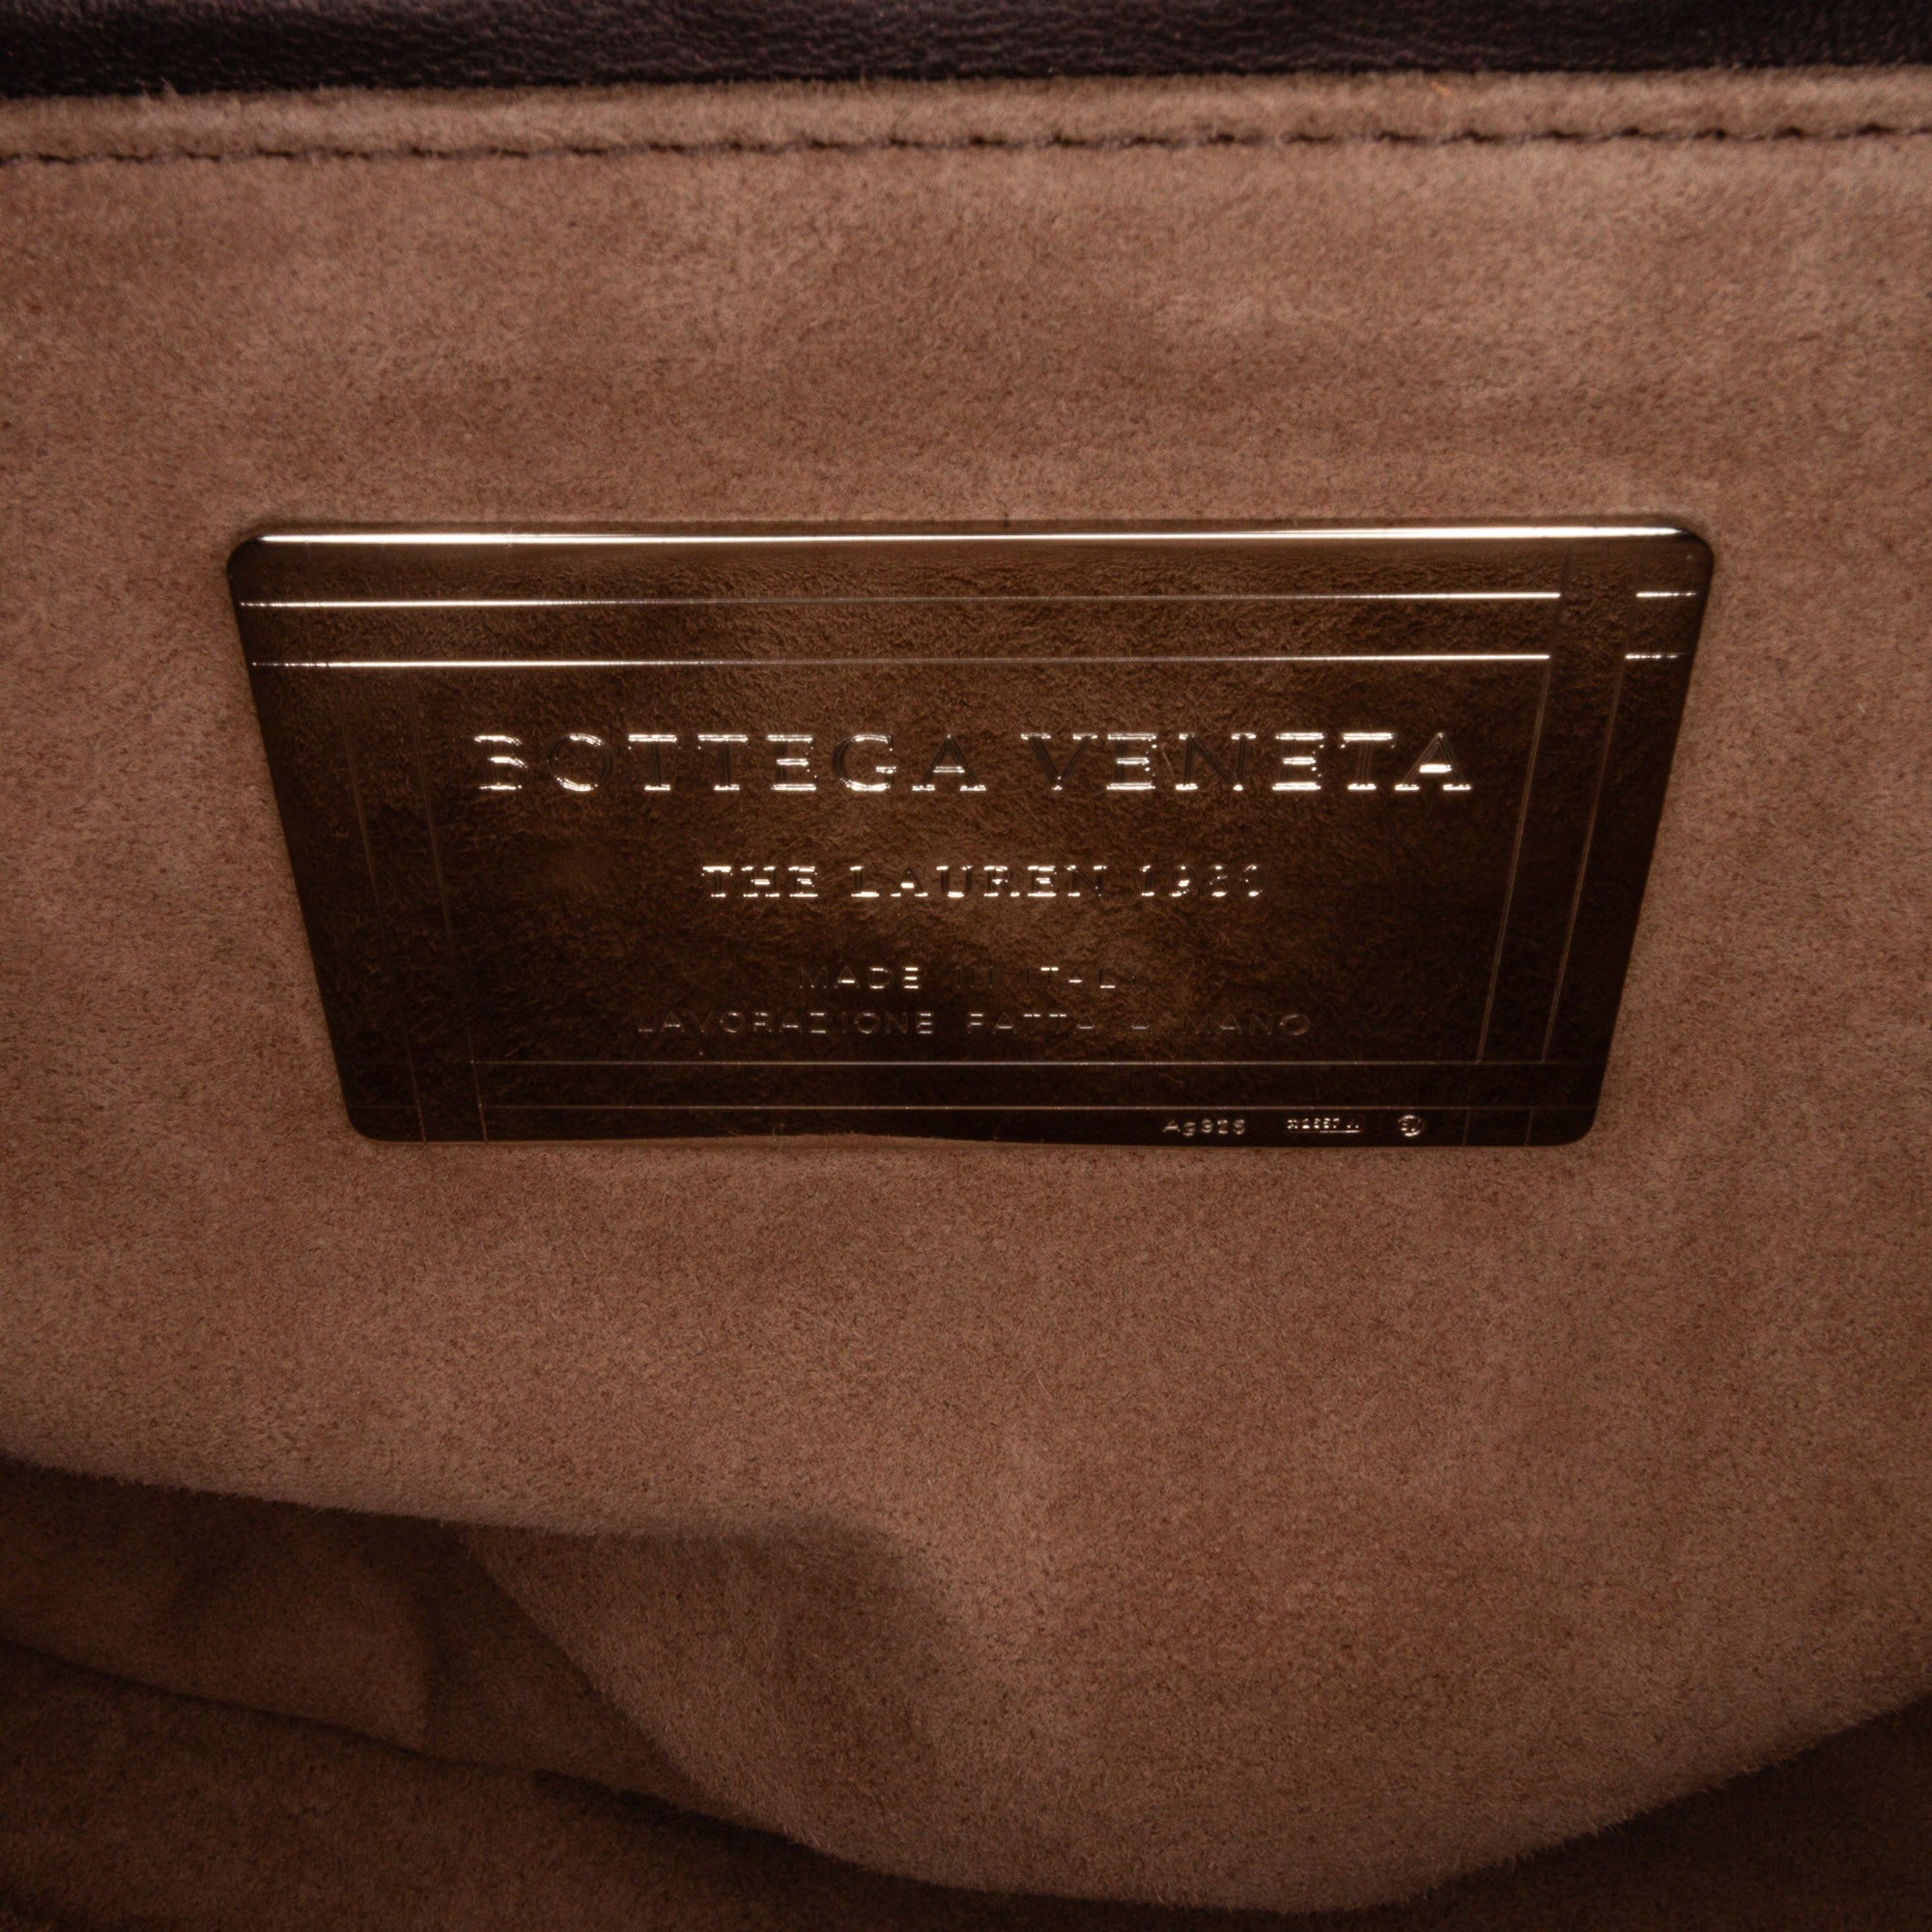 Bottega Veneta Pre-owned The Lauren 1980 Clutch Bag